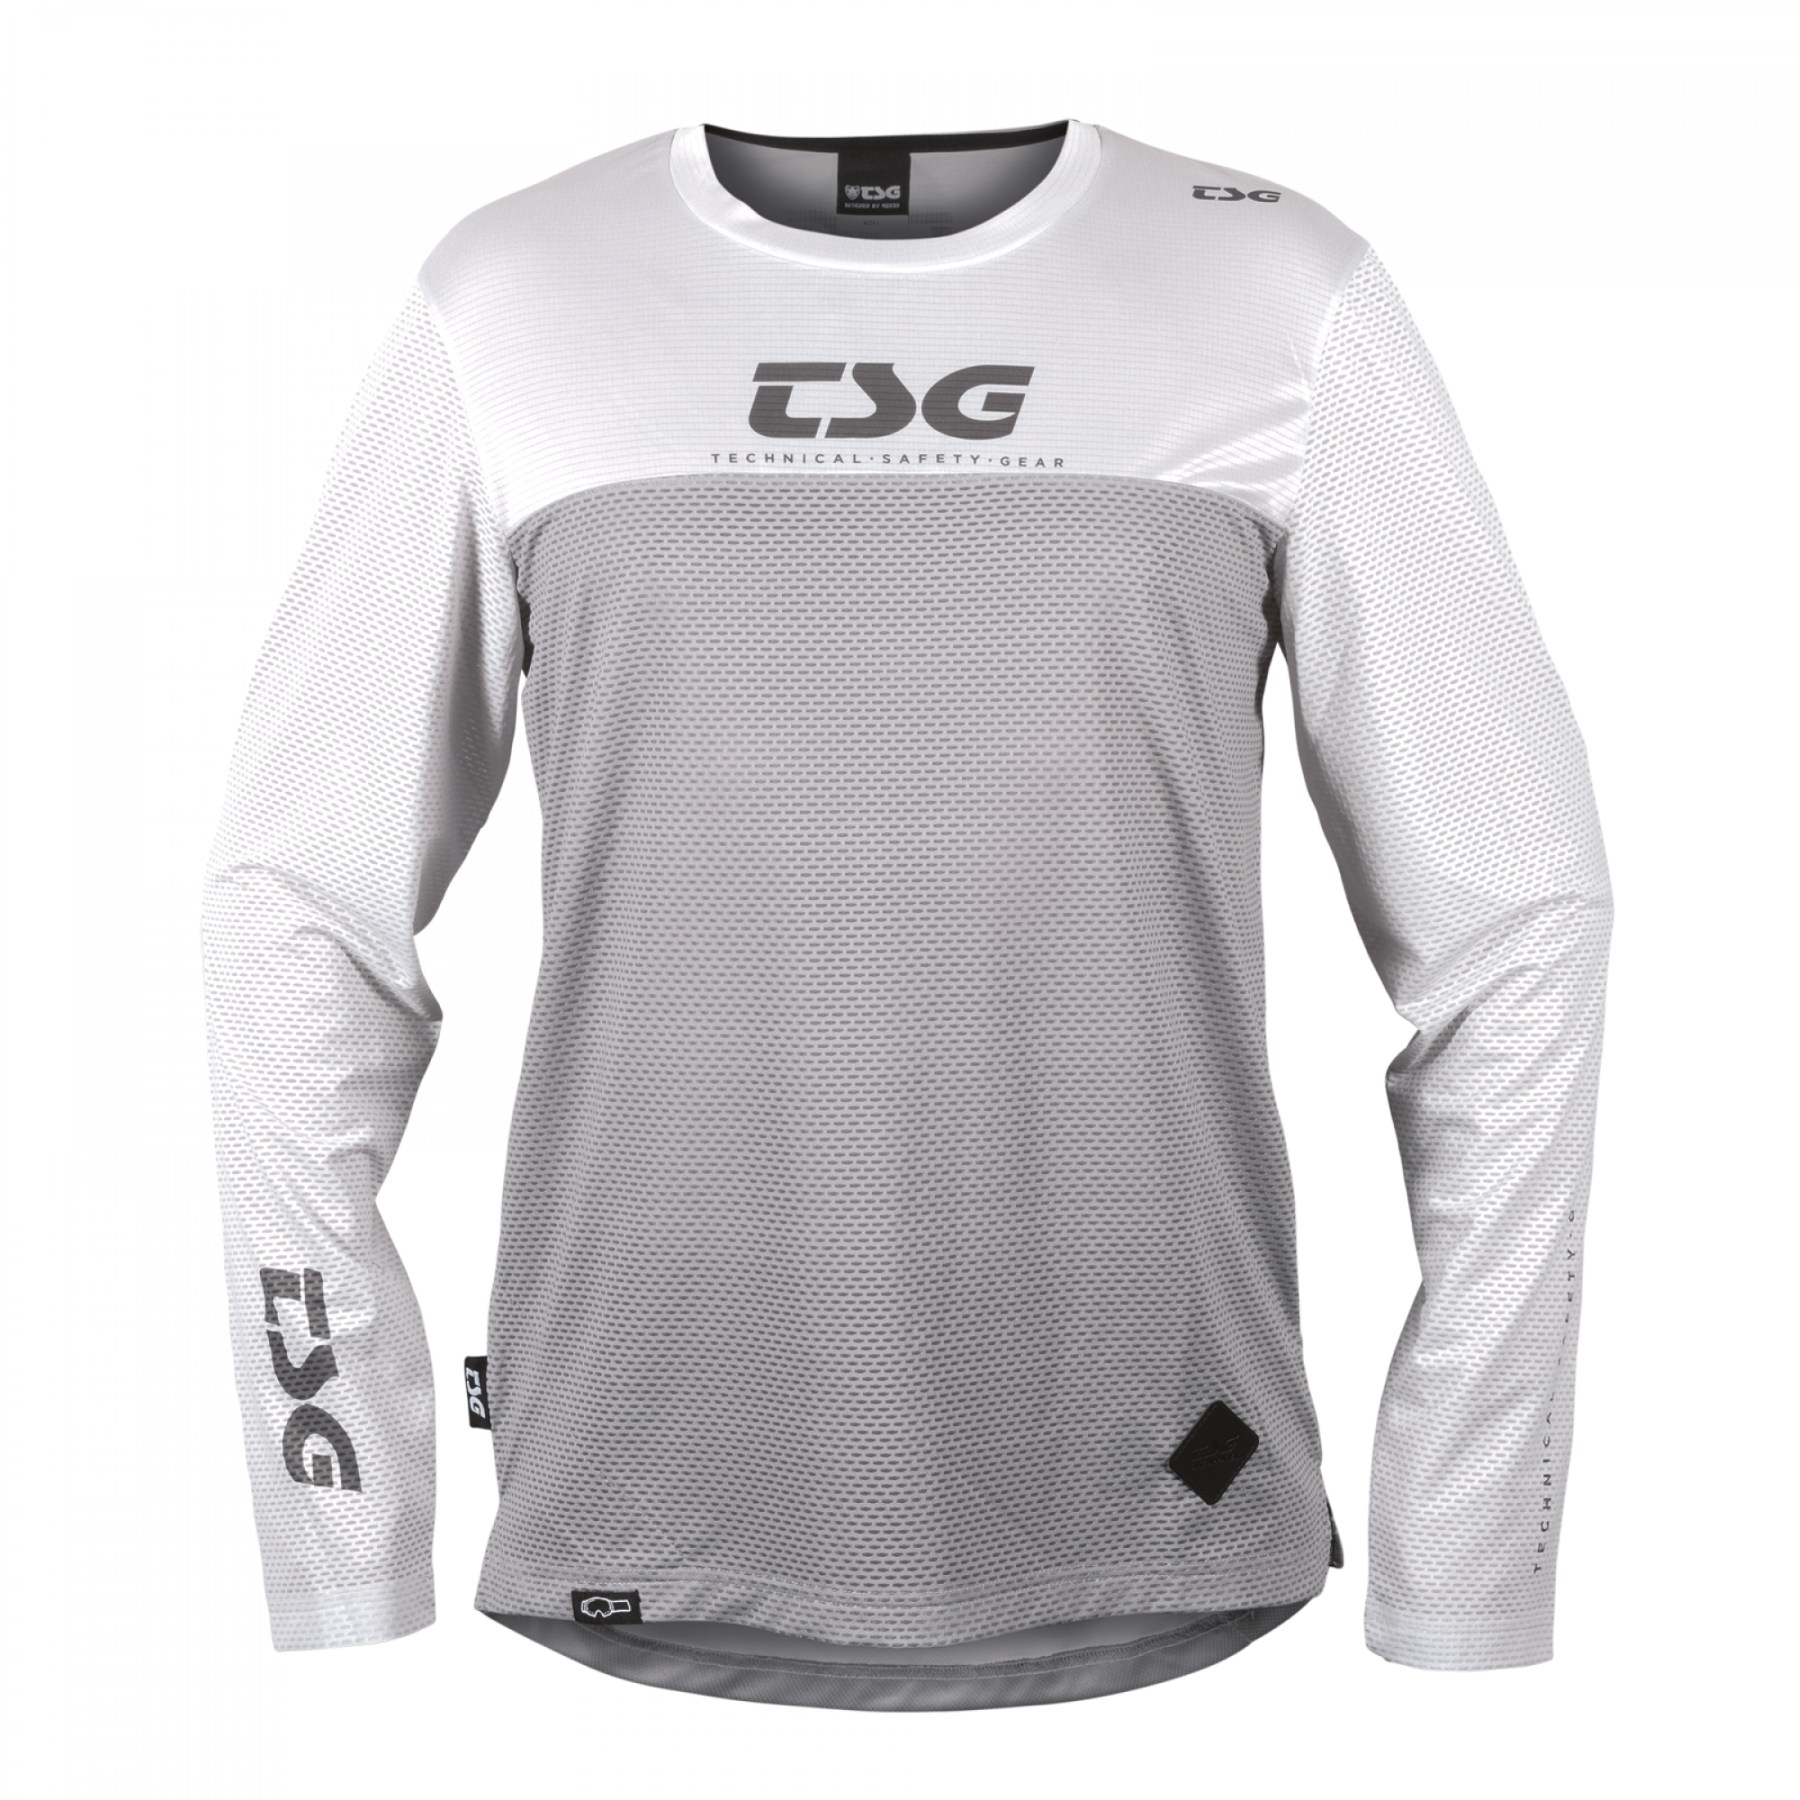 Productfoto van TSG Shirt met Lange Mouwen - Mf3 - cool grey